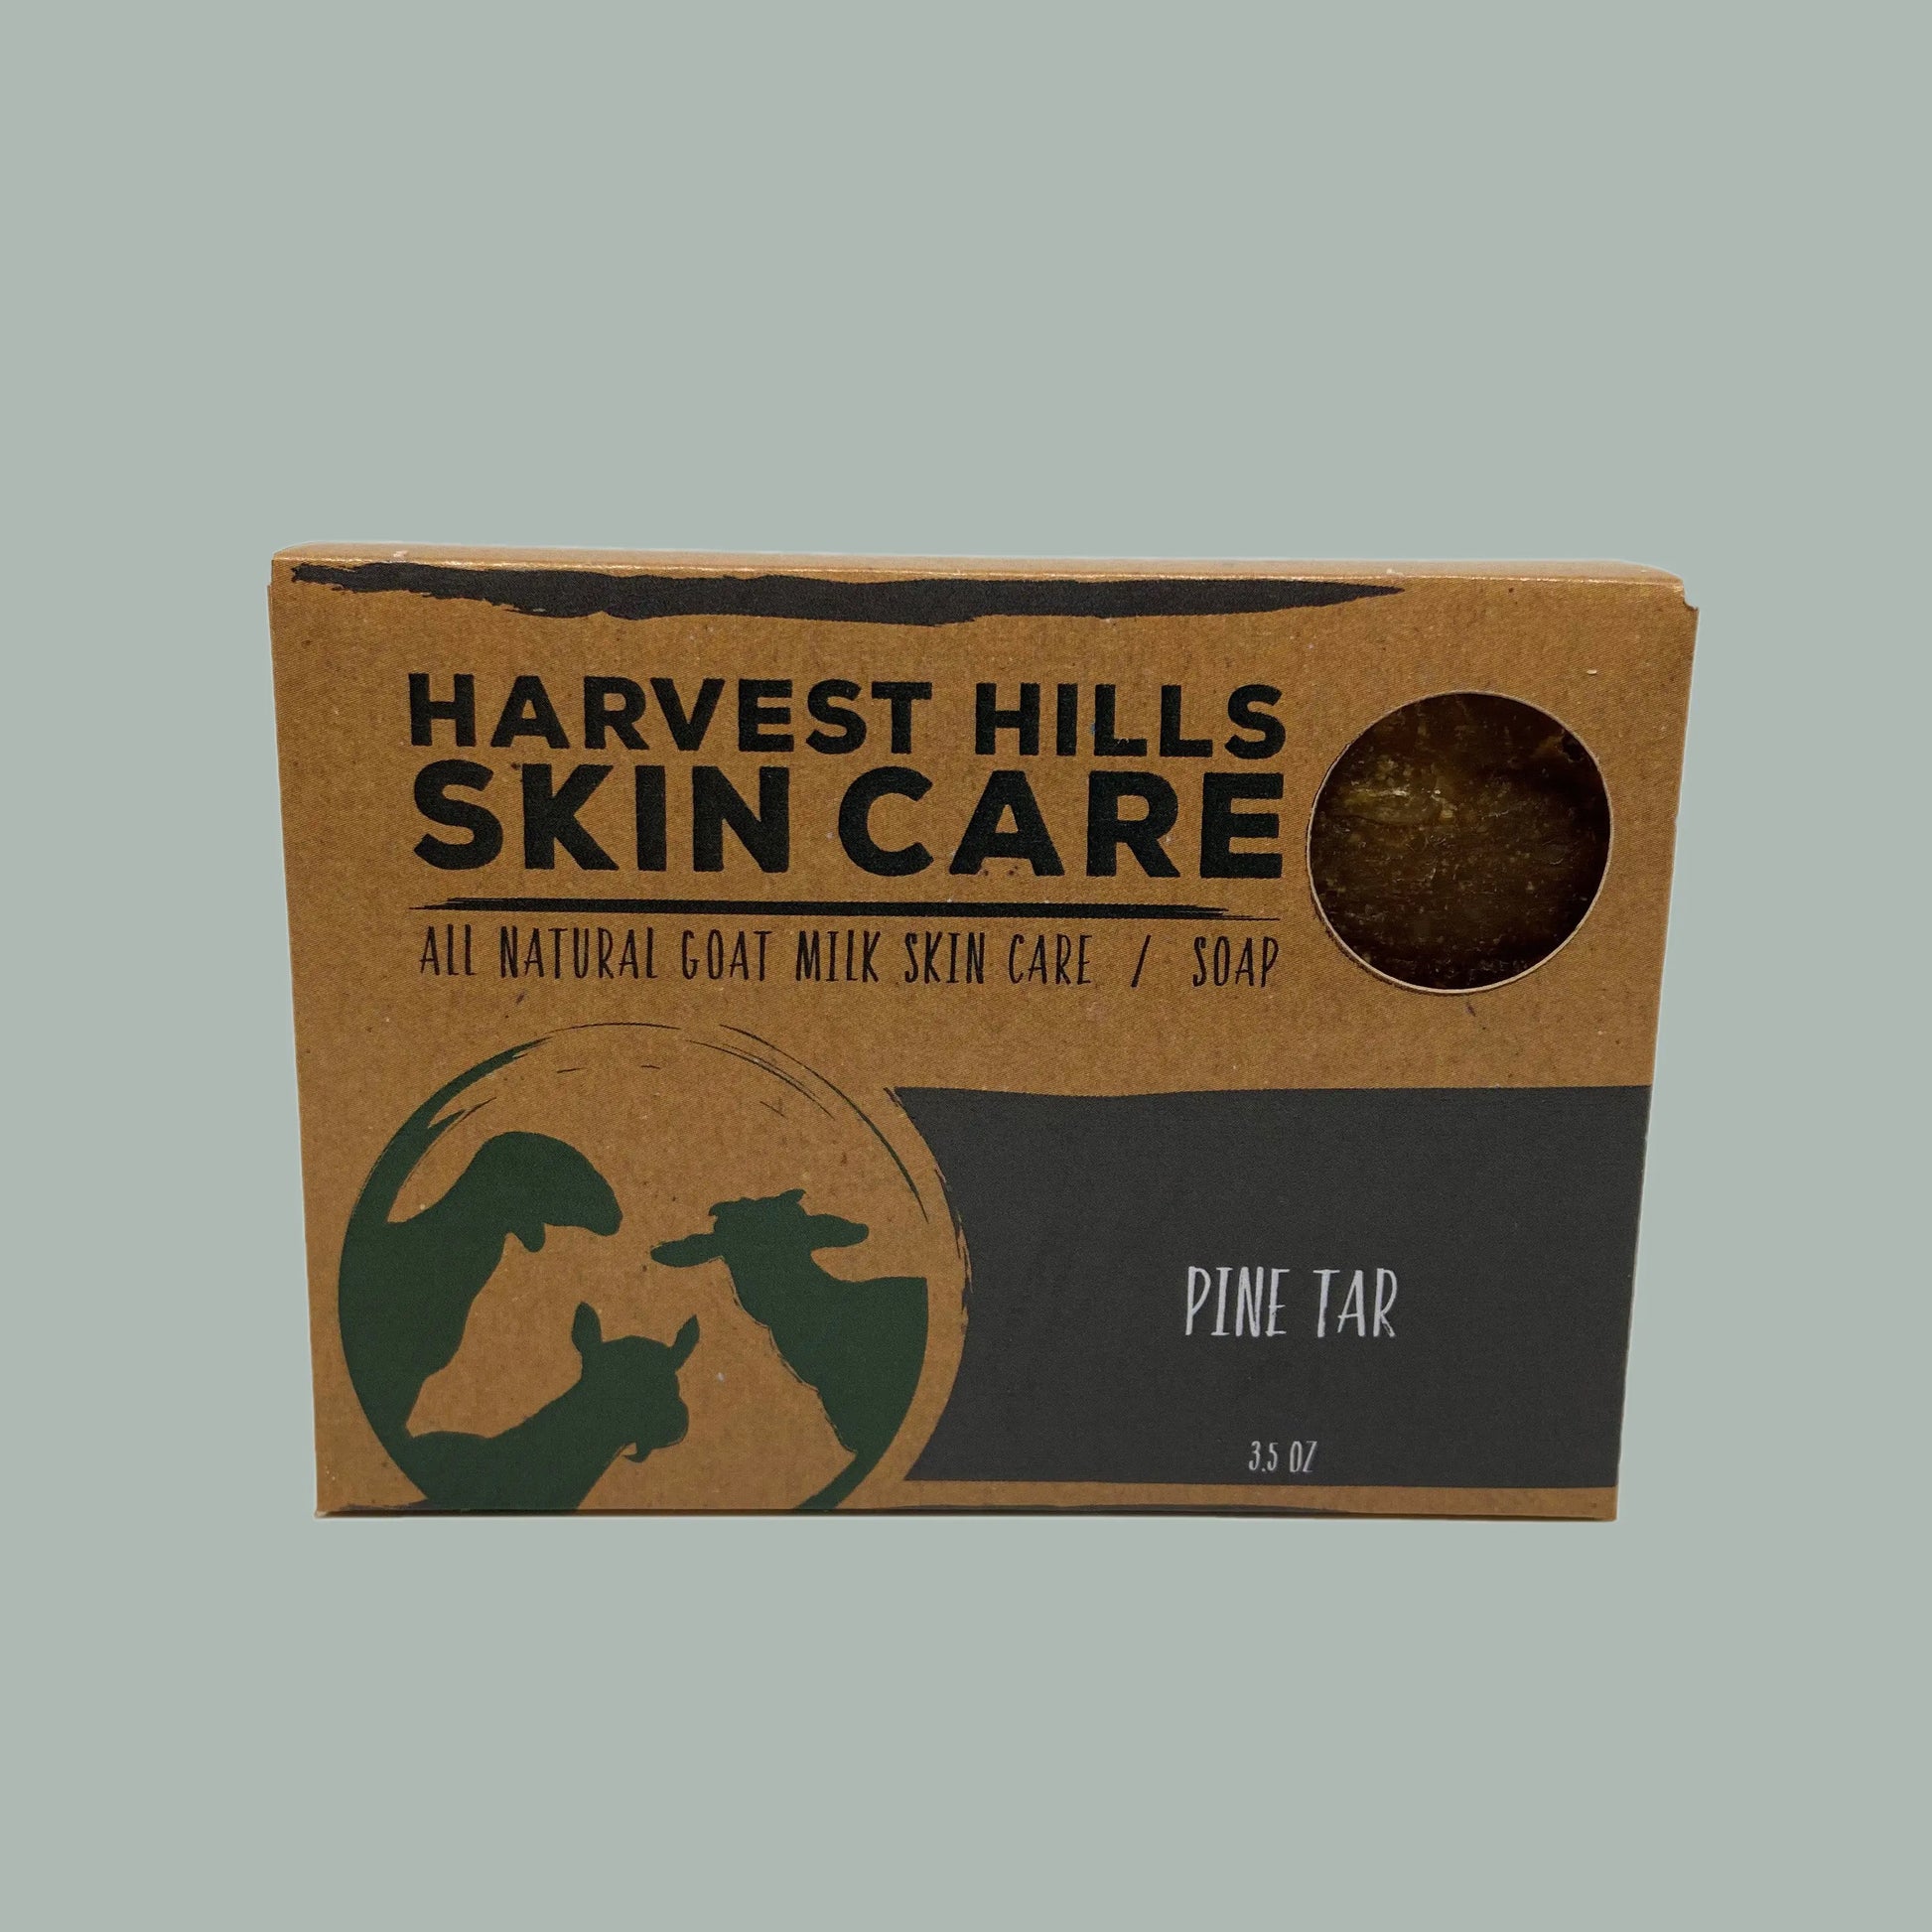 Pine Tar Goat Milk Soap Harvest Hills Skin Care - All Natural Goat Milk Skin Care, LLC